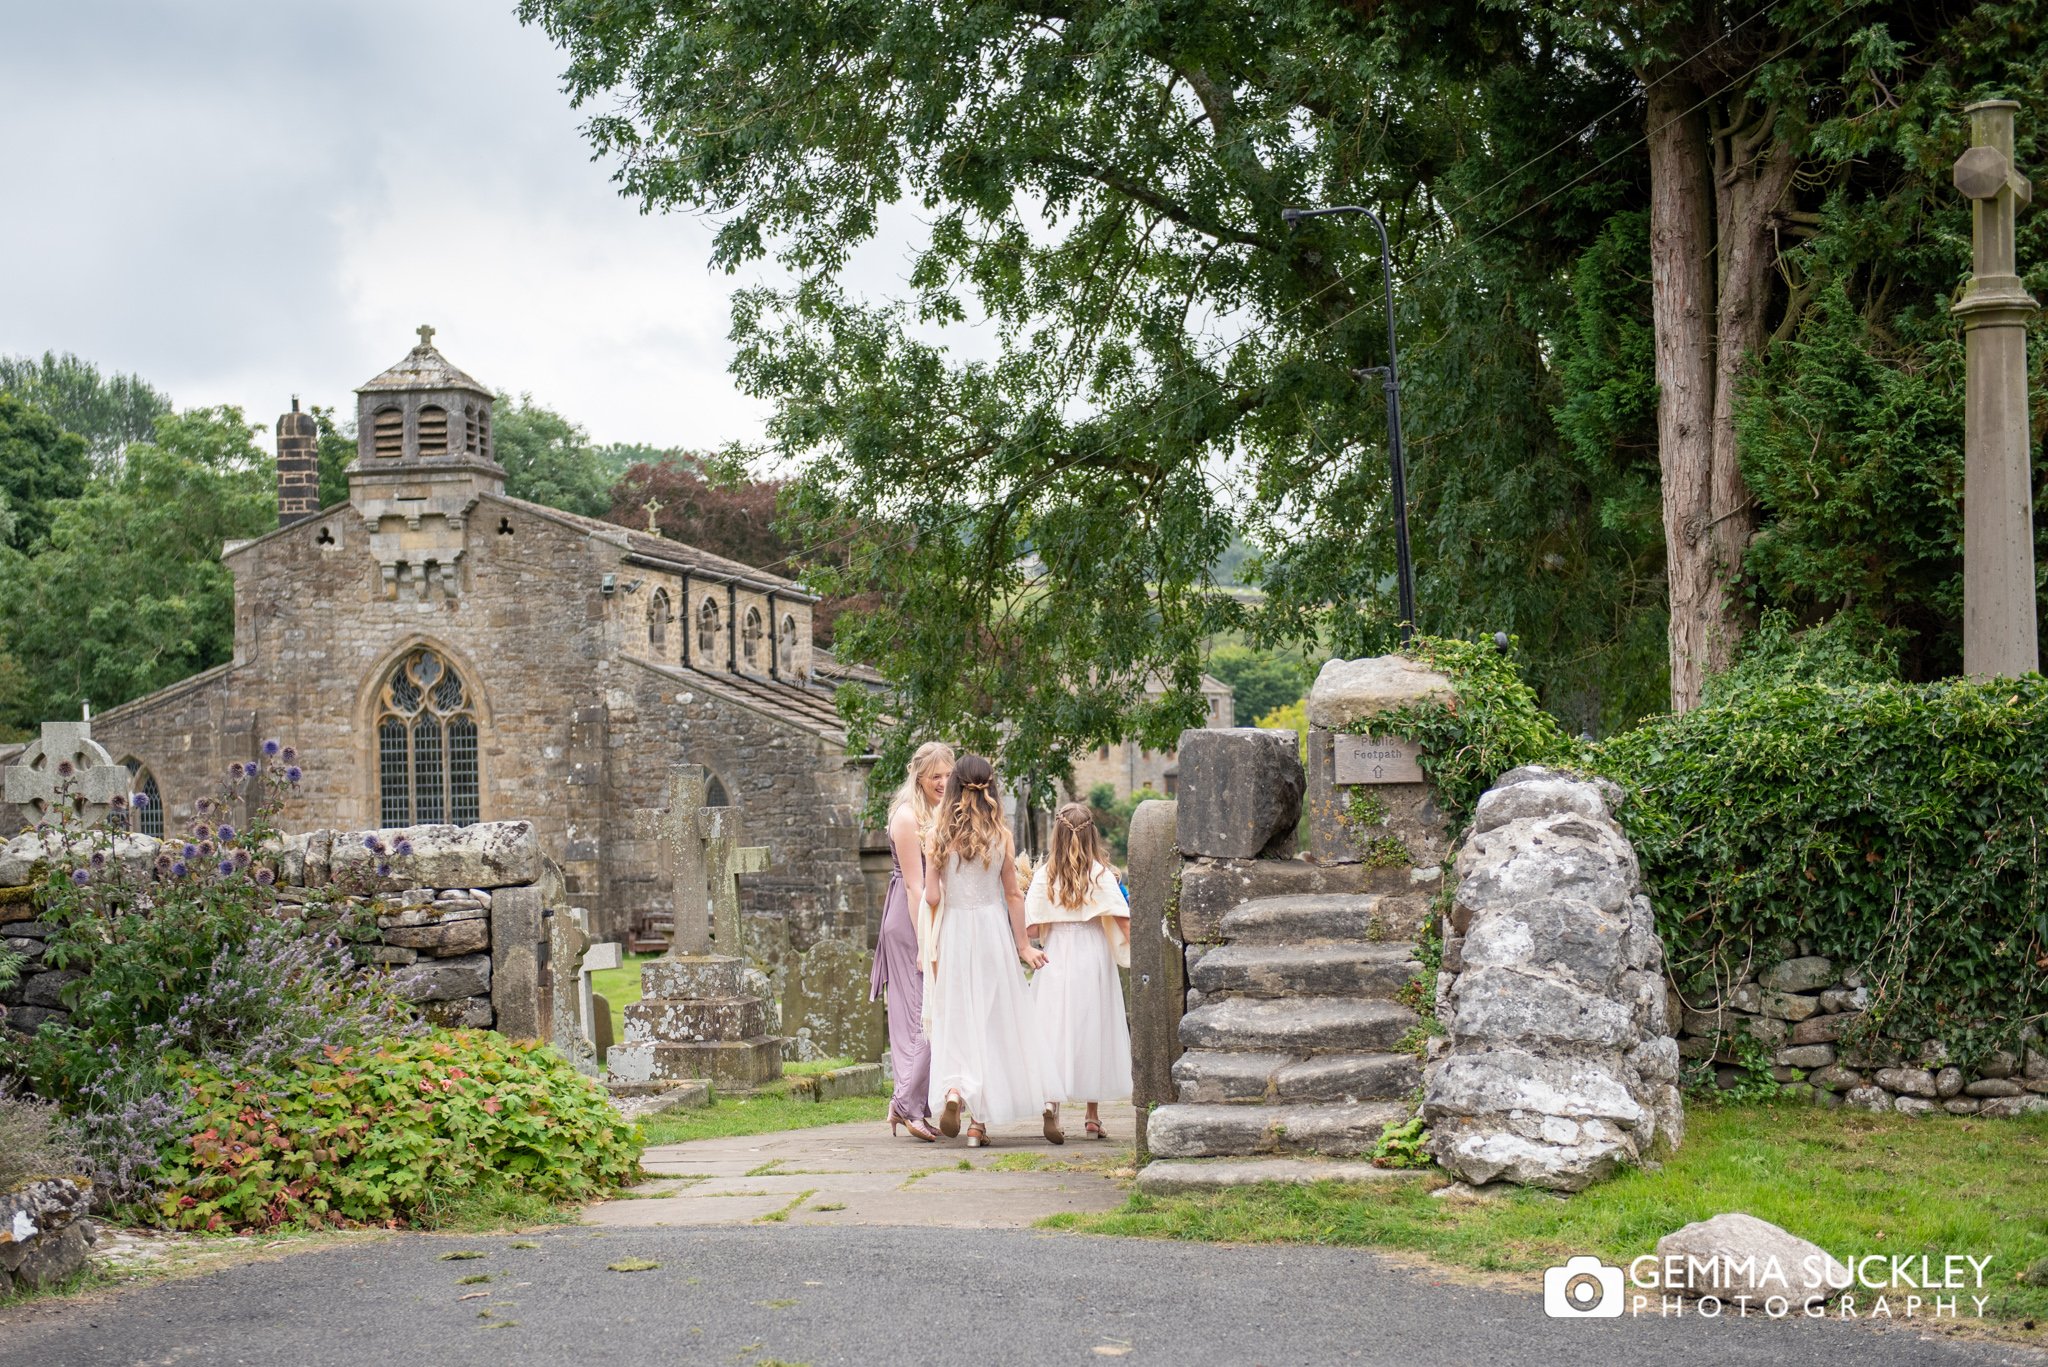 establishing photo of linton church and the flower girls walking into the church yard